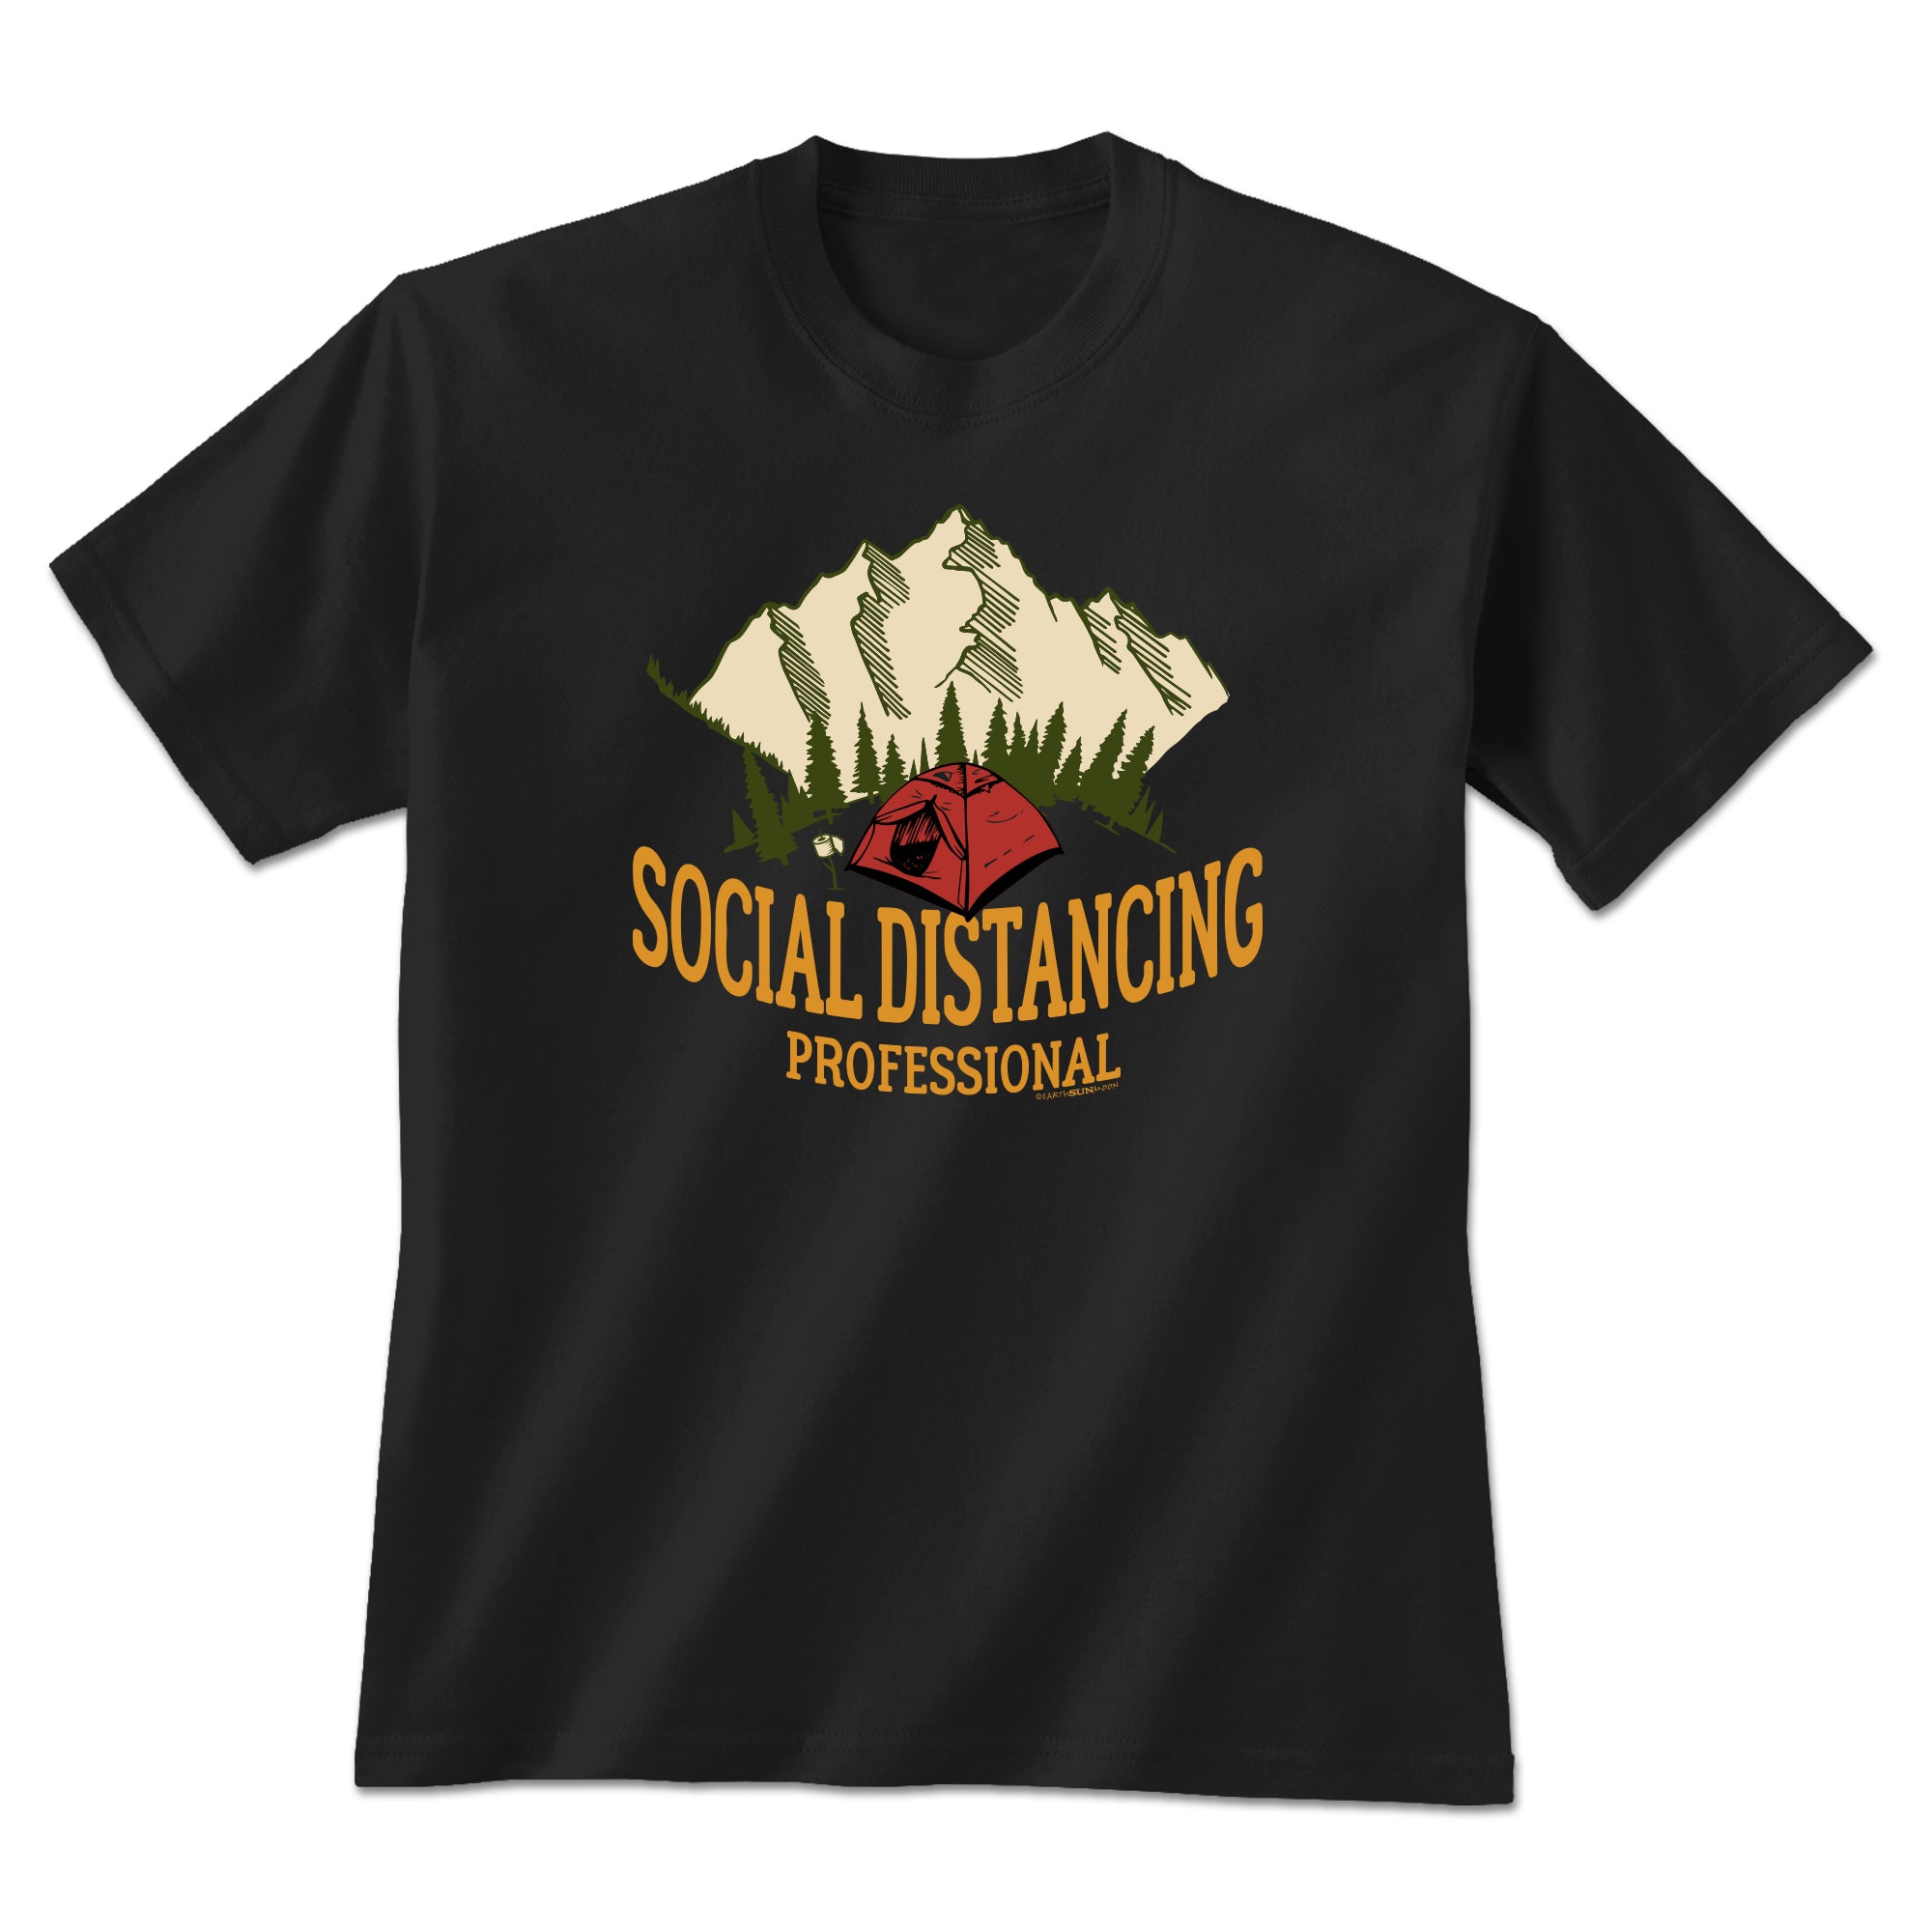 Social Distancing Professional T-Shirt - Black - 5X